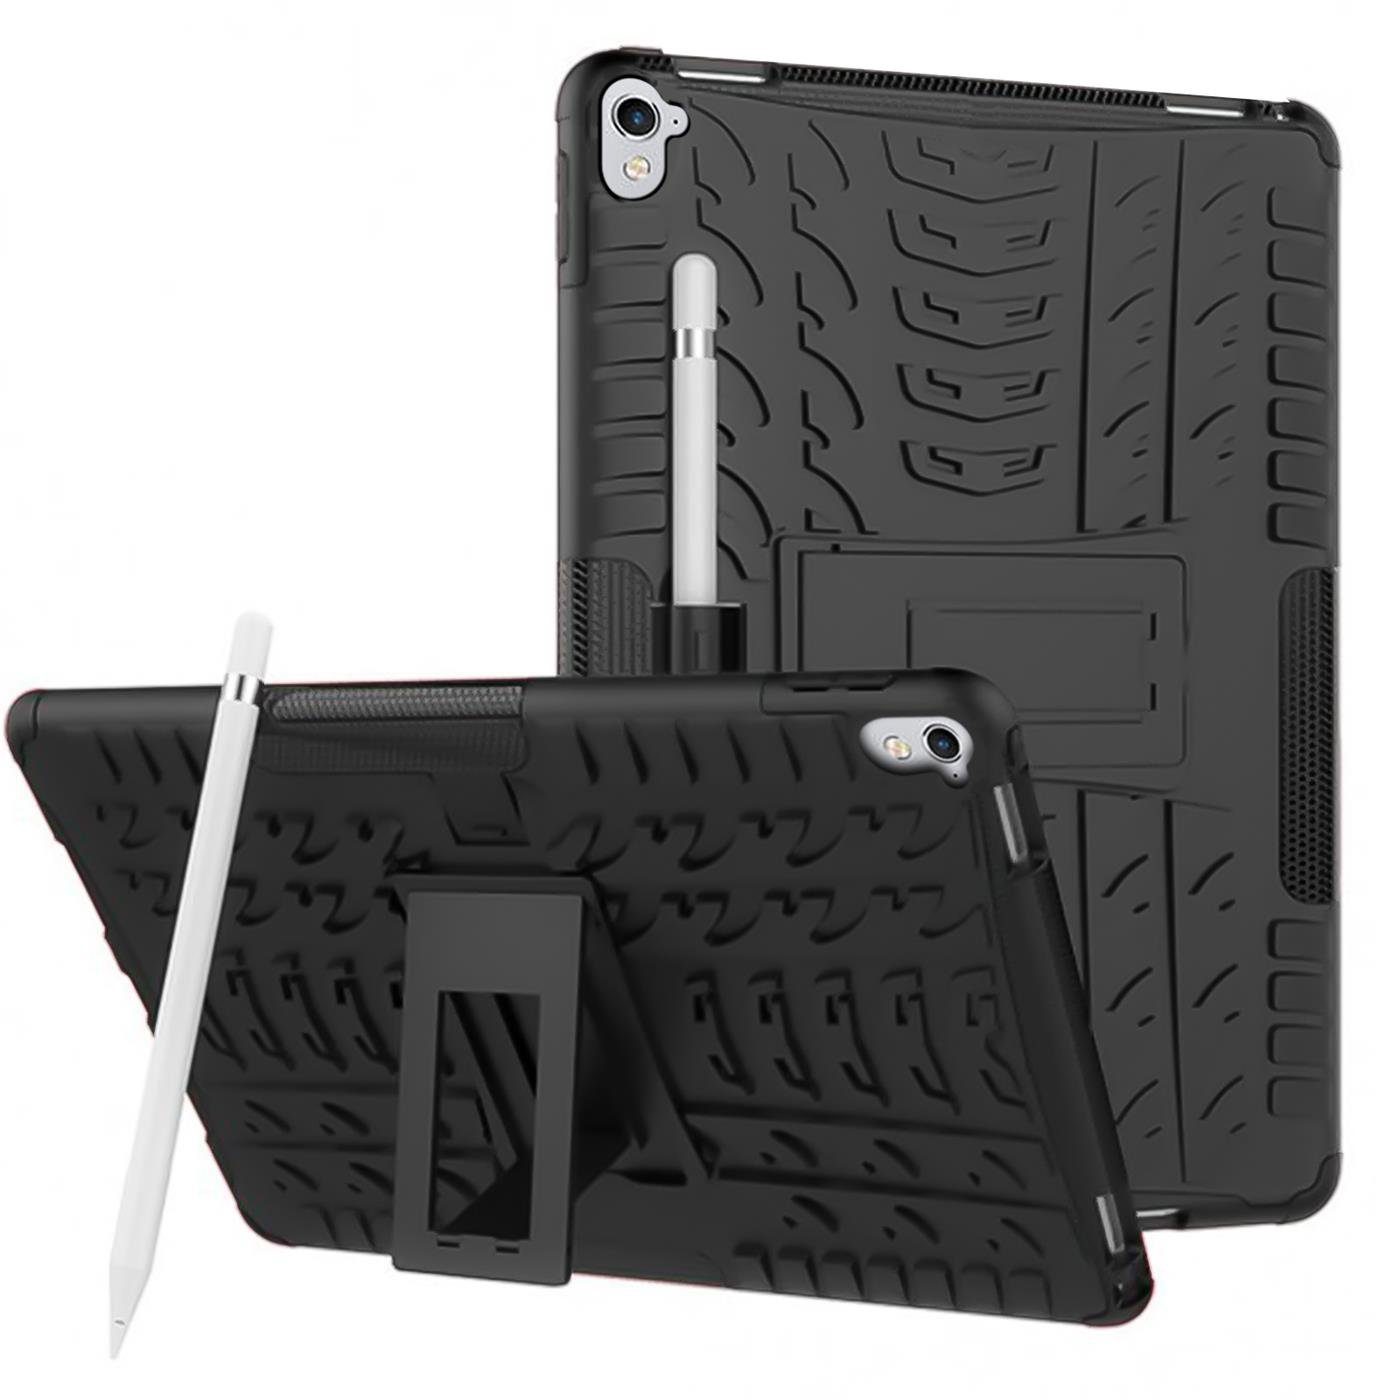 CoolGadget Tablet-Hülle Hybrid Outdoor Hülle für Apple iPad Pro 9.7 9,7 Zoll,  Hülle massiv Outdoor Schutzhülle für iPad Pro 9.7 Tablet Case